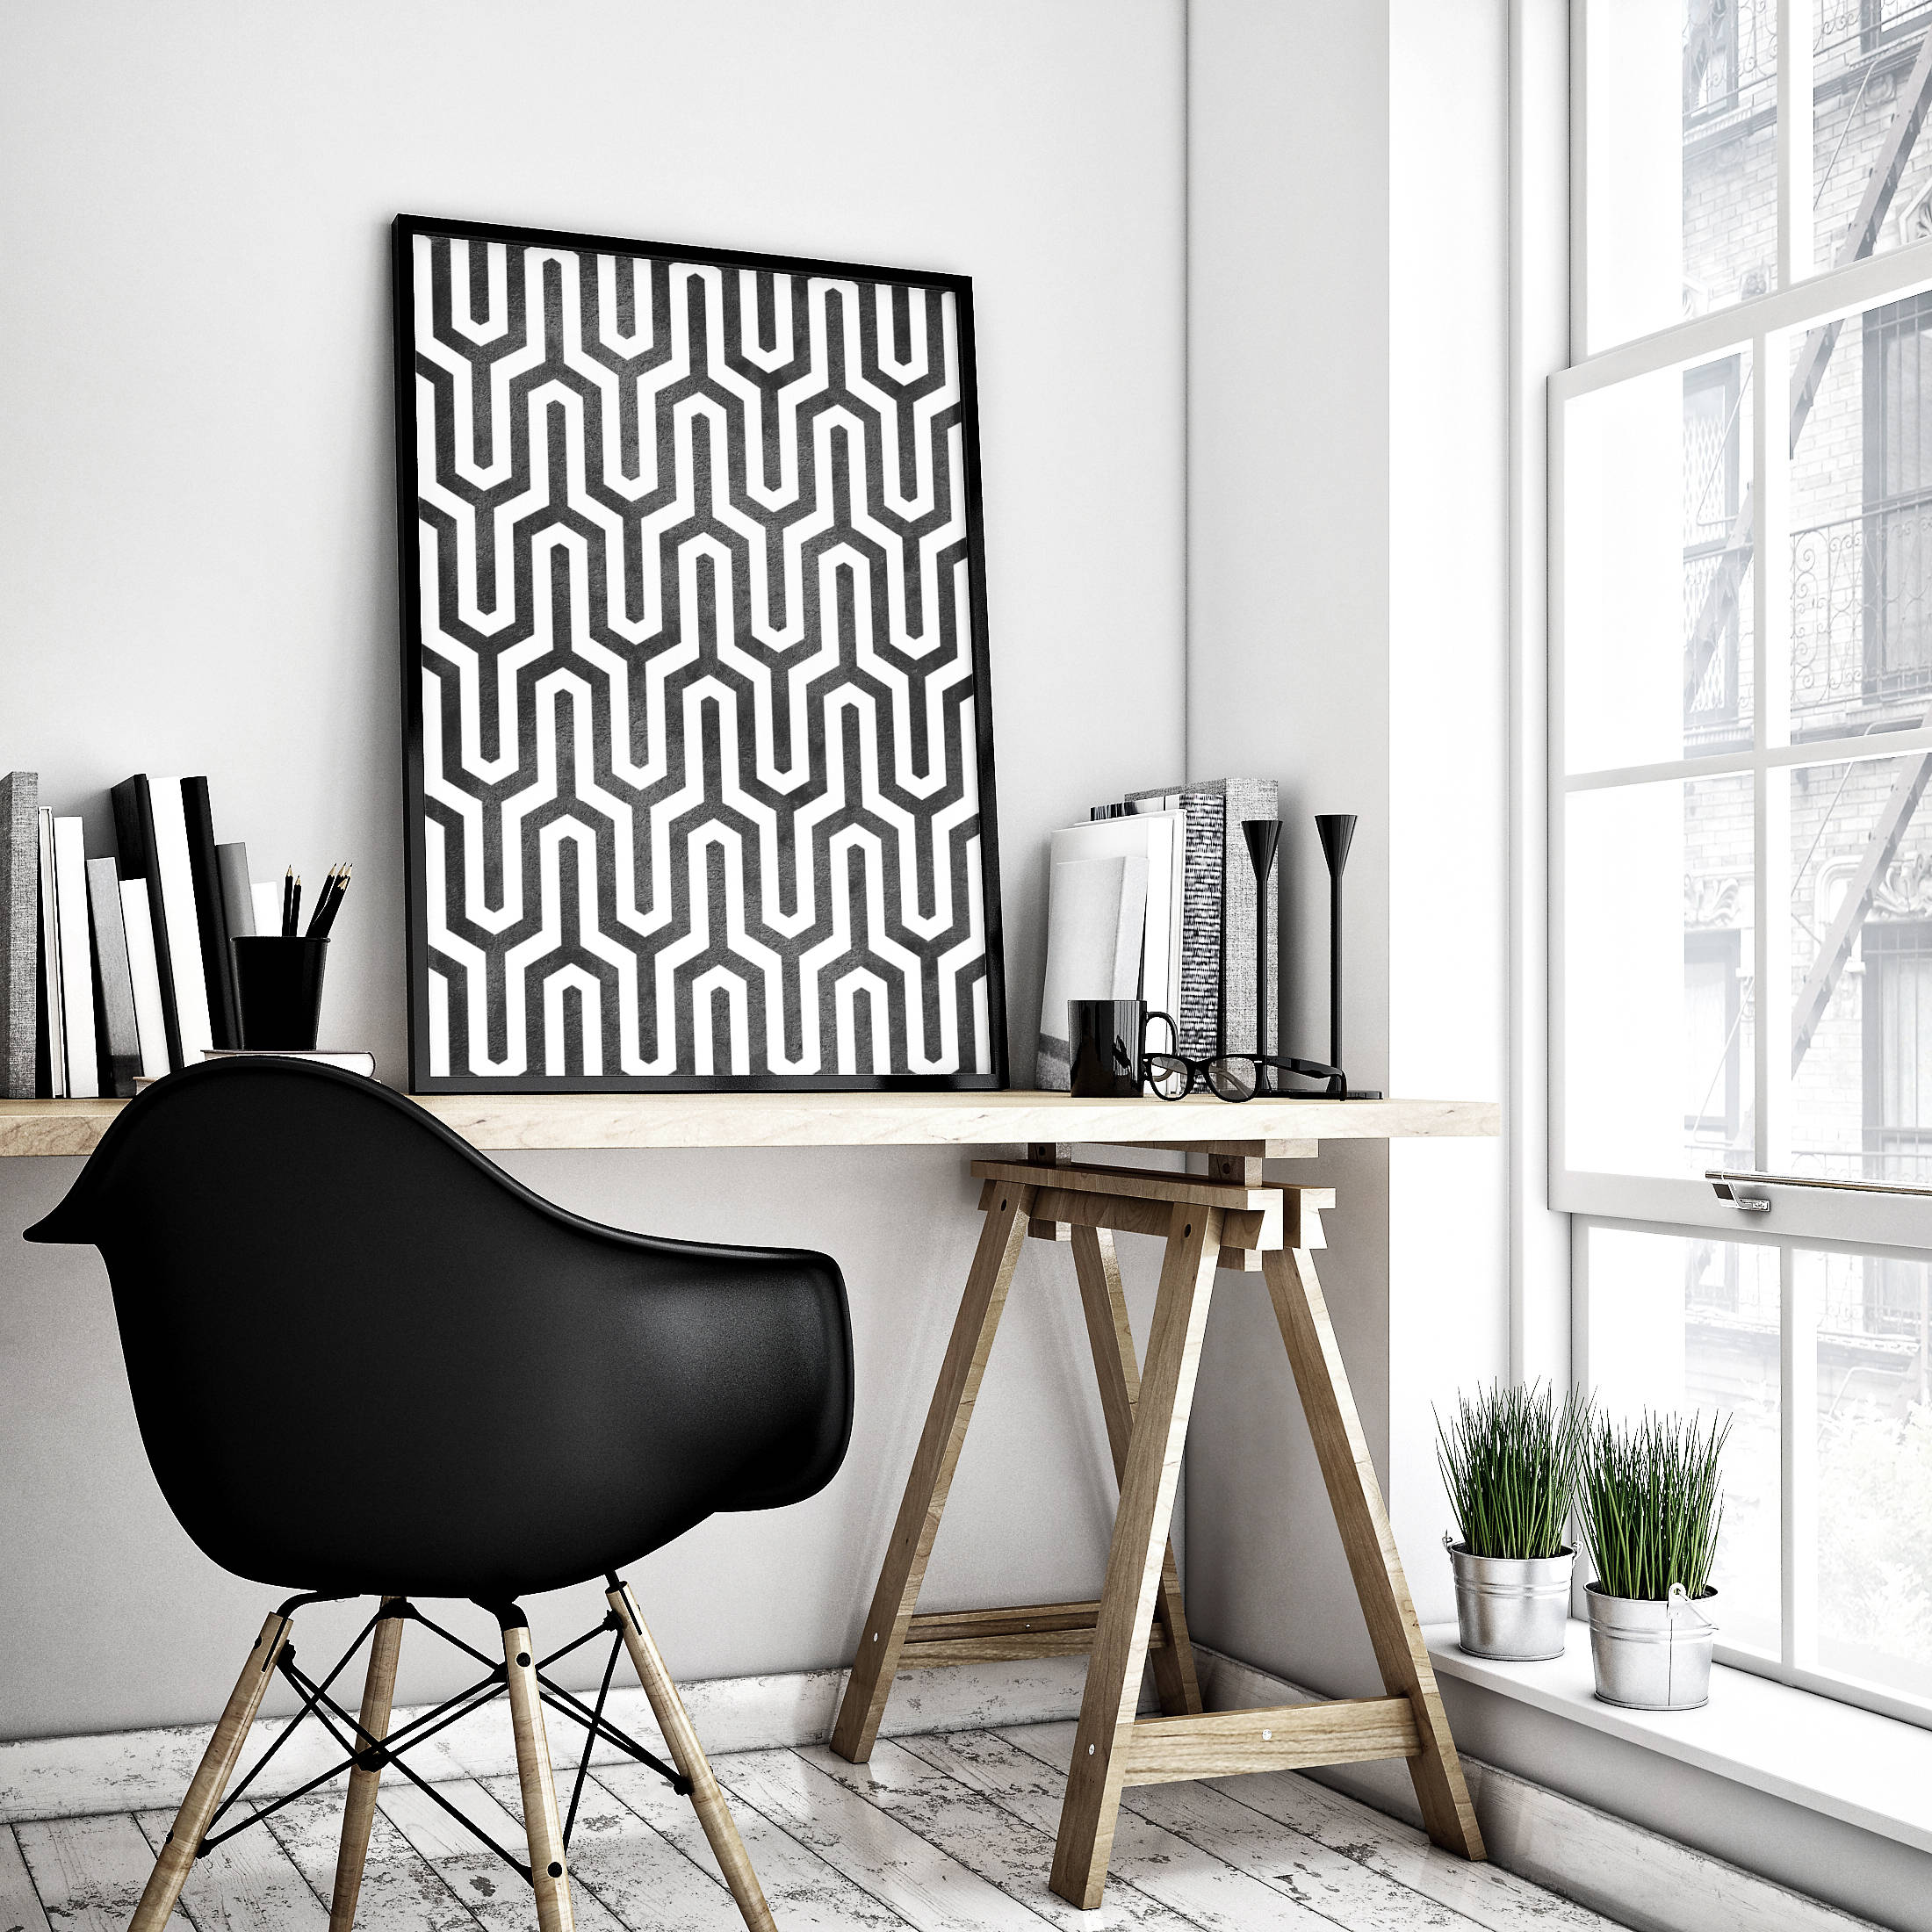 Black and White Geometric Prints Large Print Poster Room Wall Art Decor